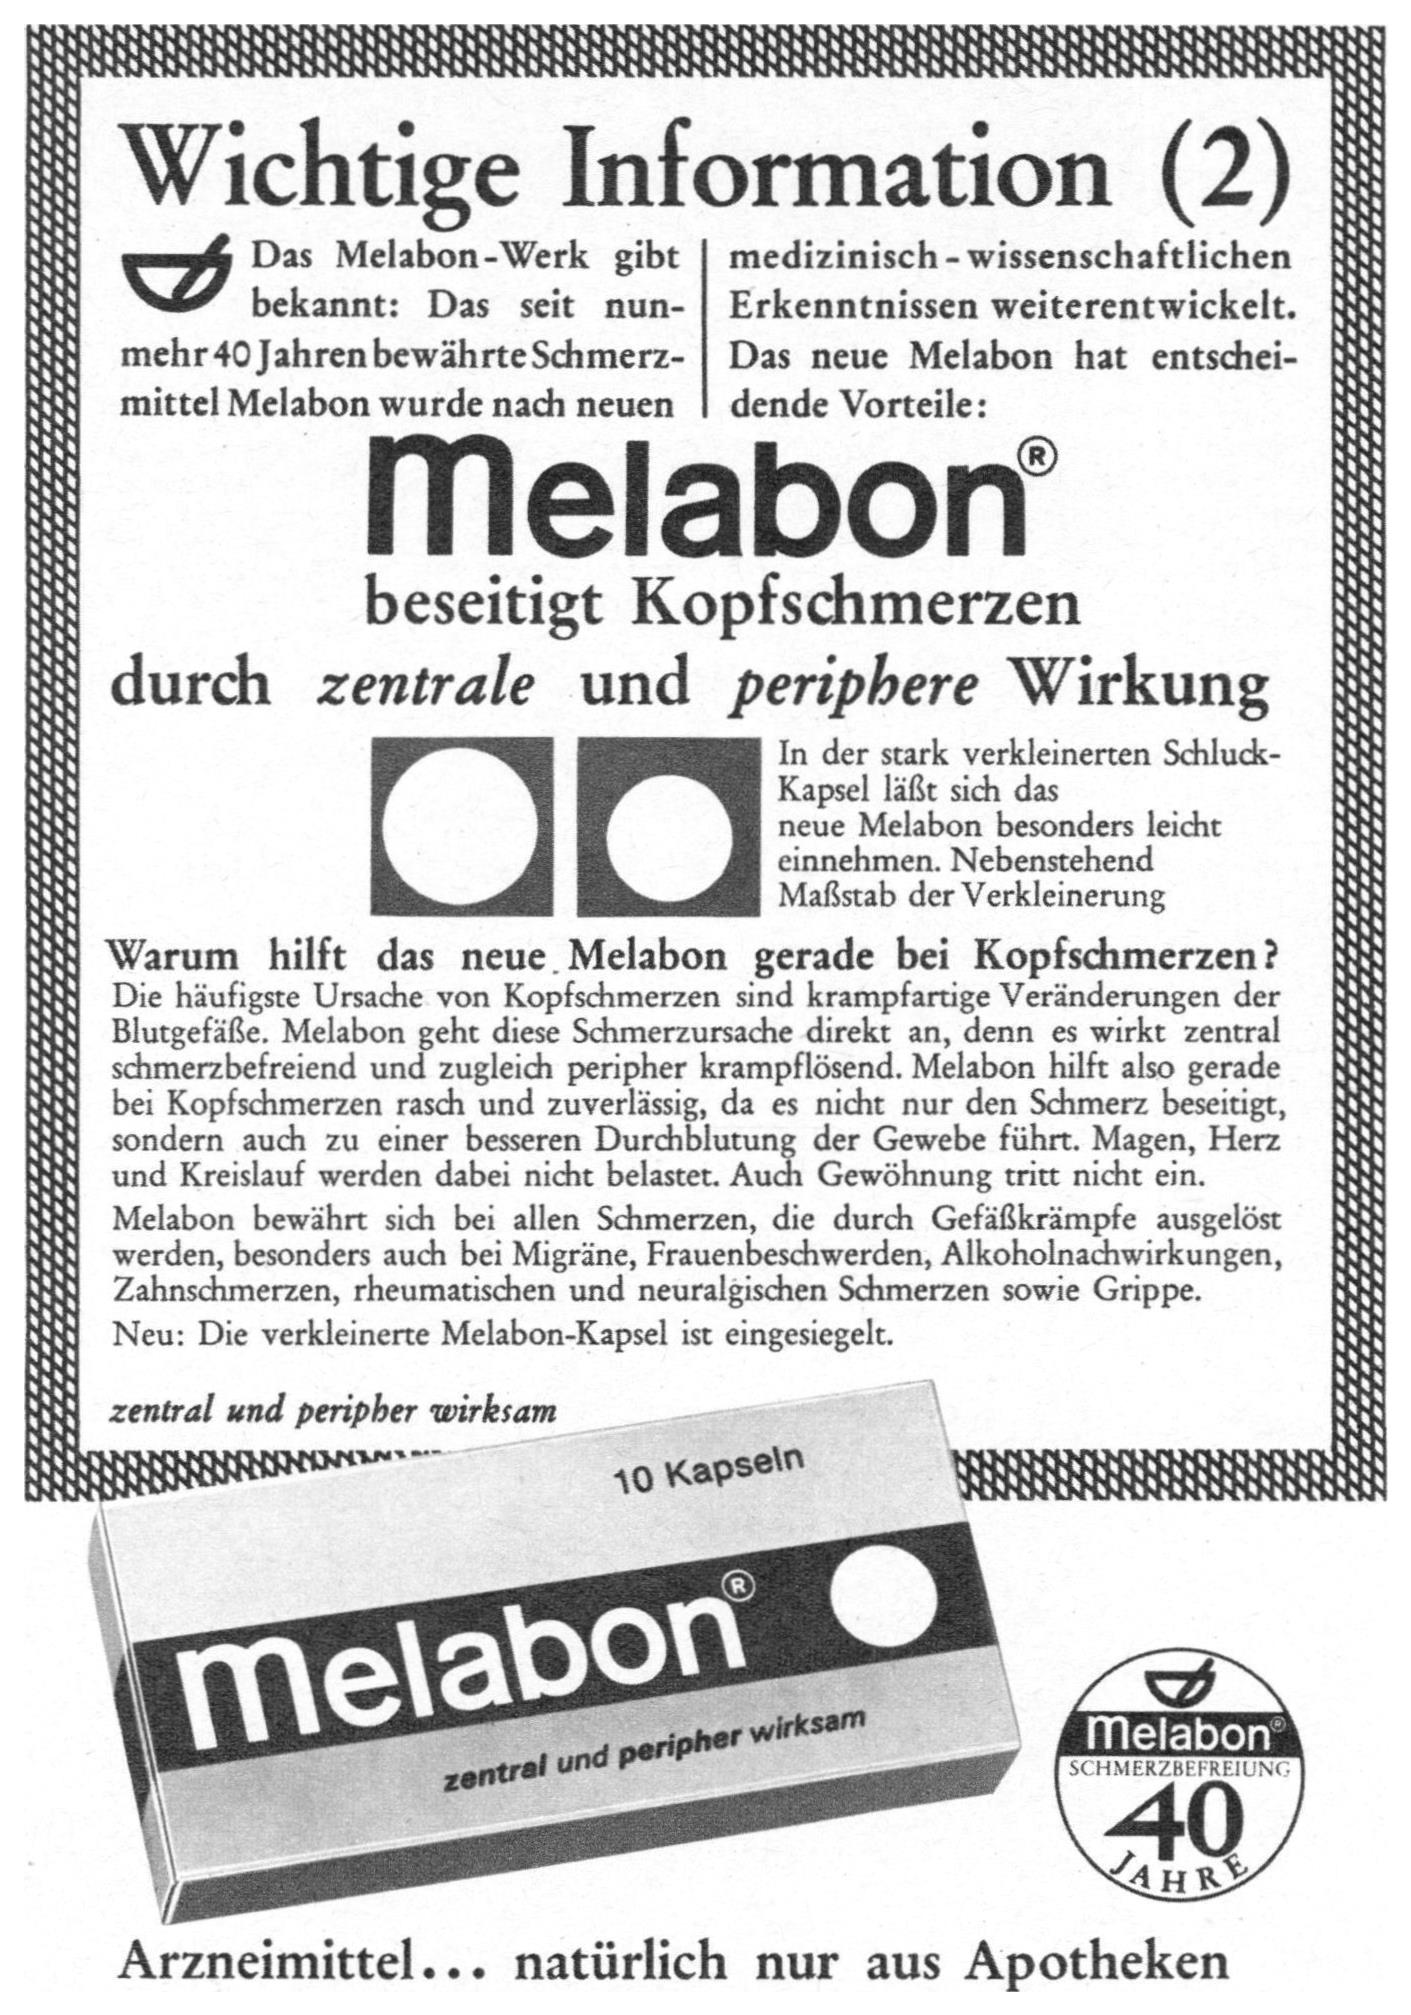 Melabon 1964 0 .jpg